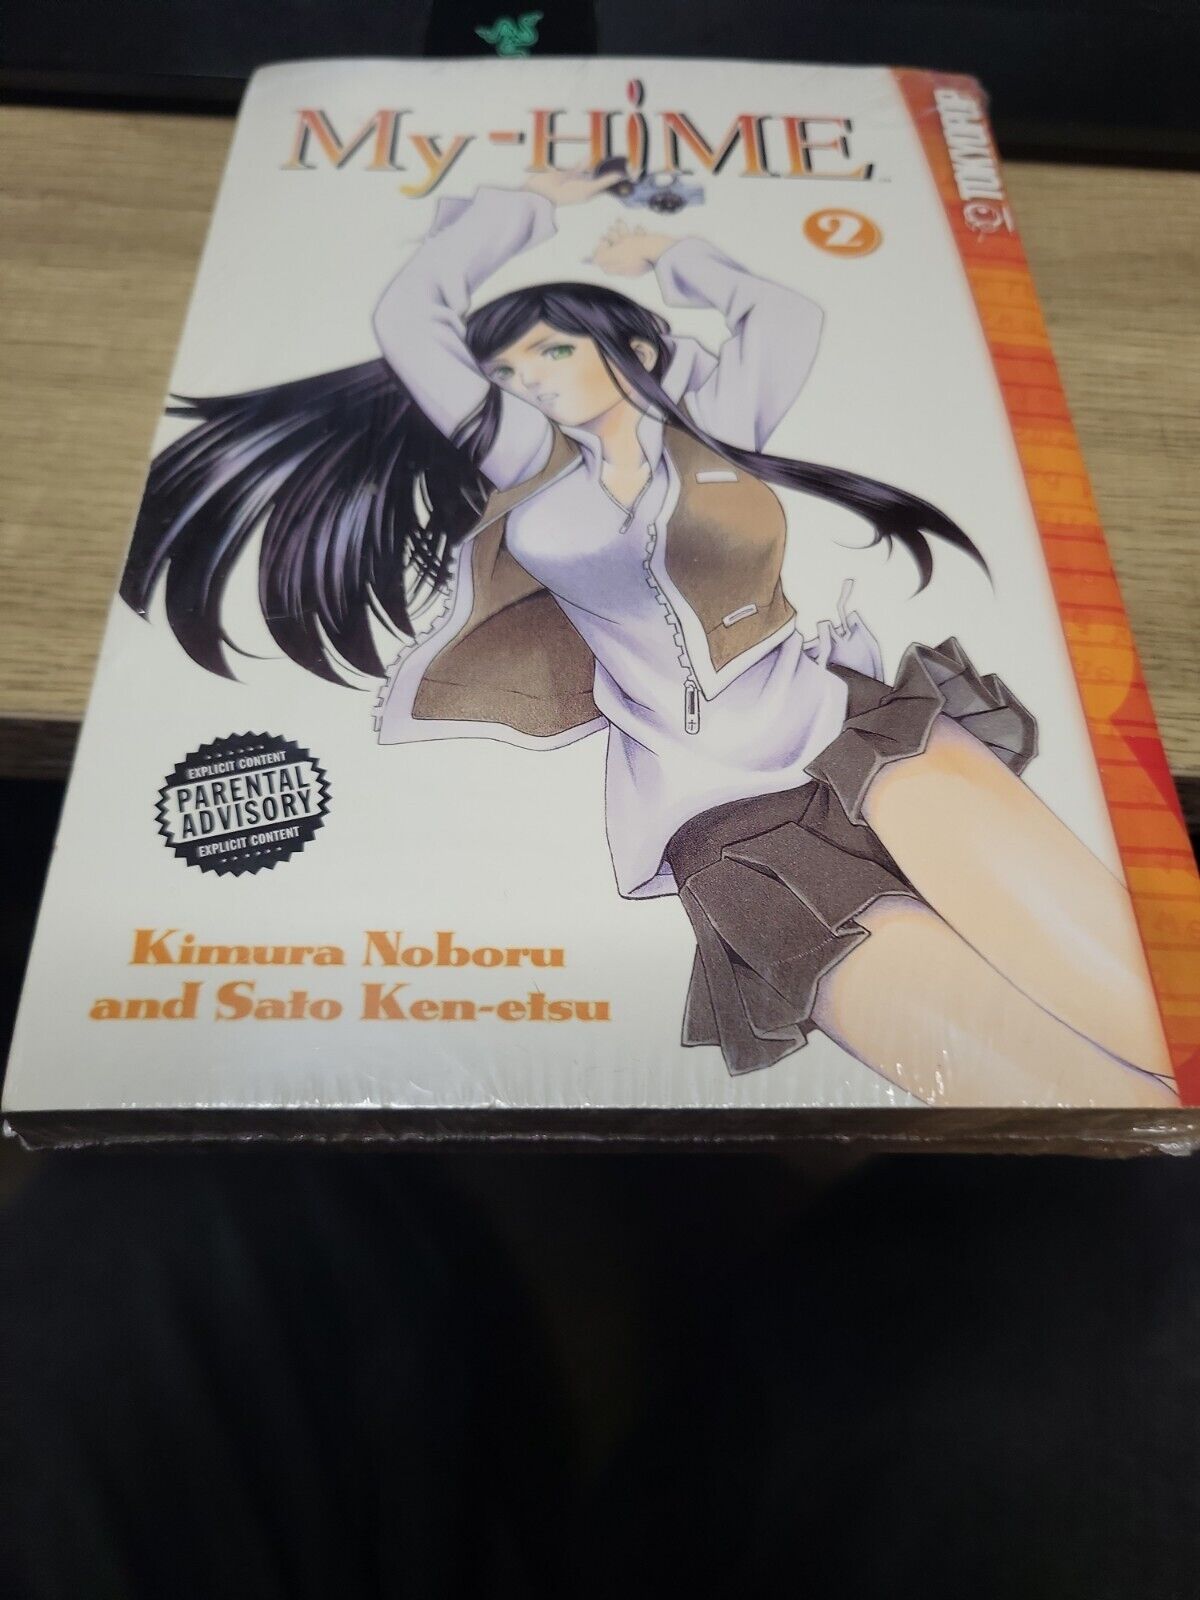 My-Hime, Vol. 2 by Kimura Noboru (Tokyopop, English Manga) 